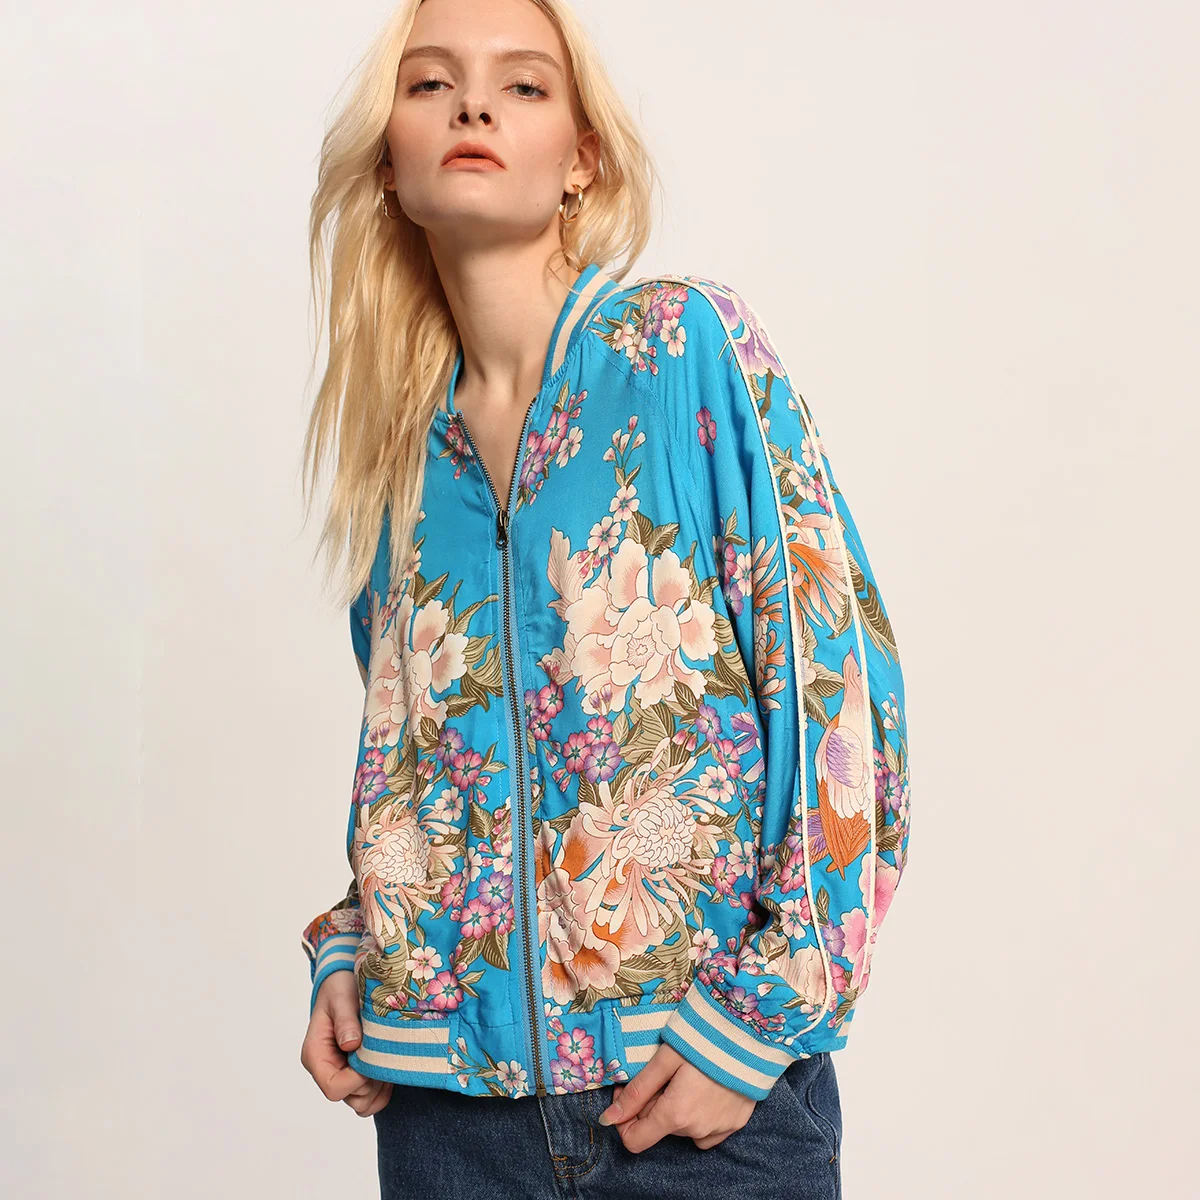 Aliexpress.com : Buy Jastie 2019 Bomber for Women Jacket Coat Floral ...